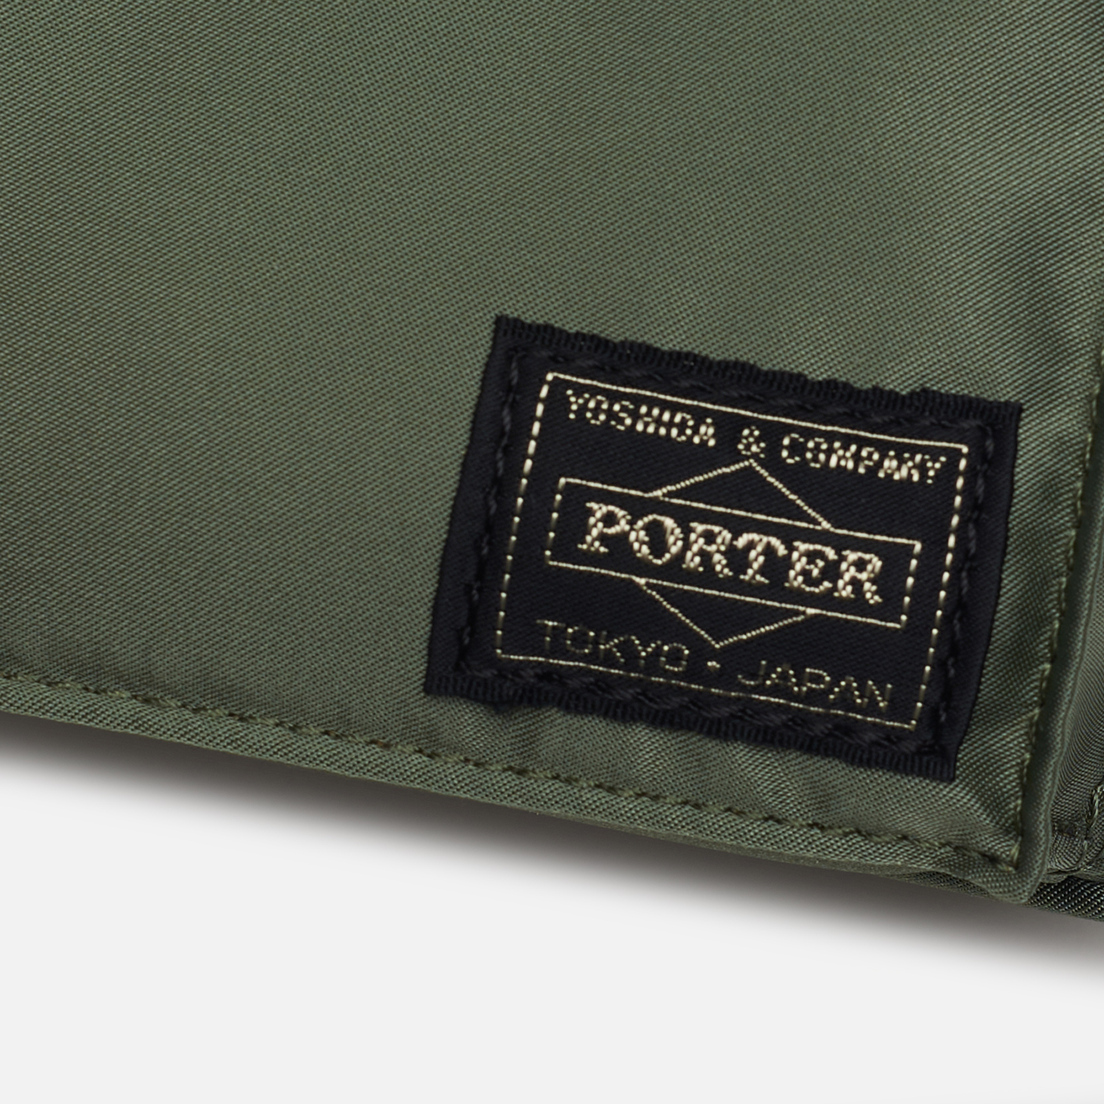 Porter-Yoshida & Co